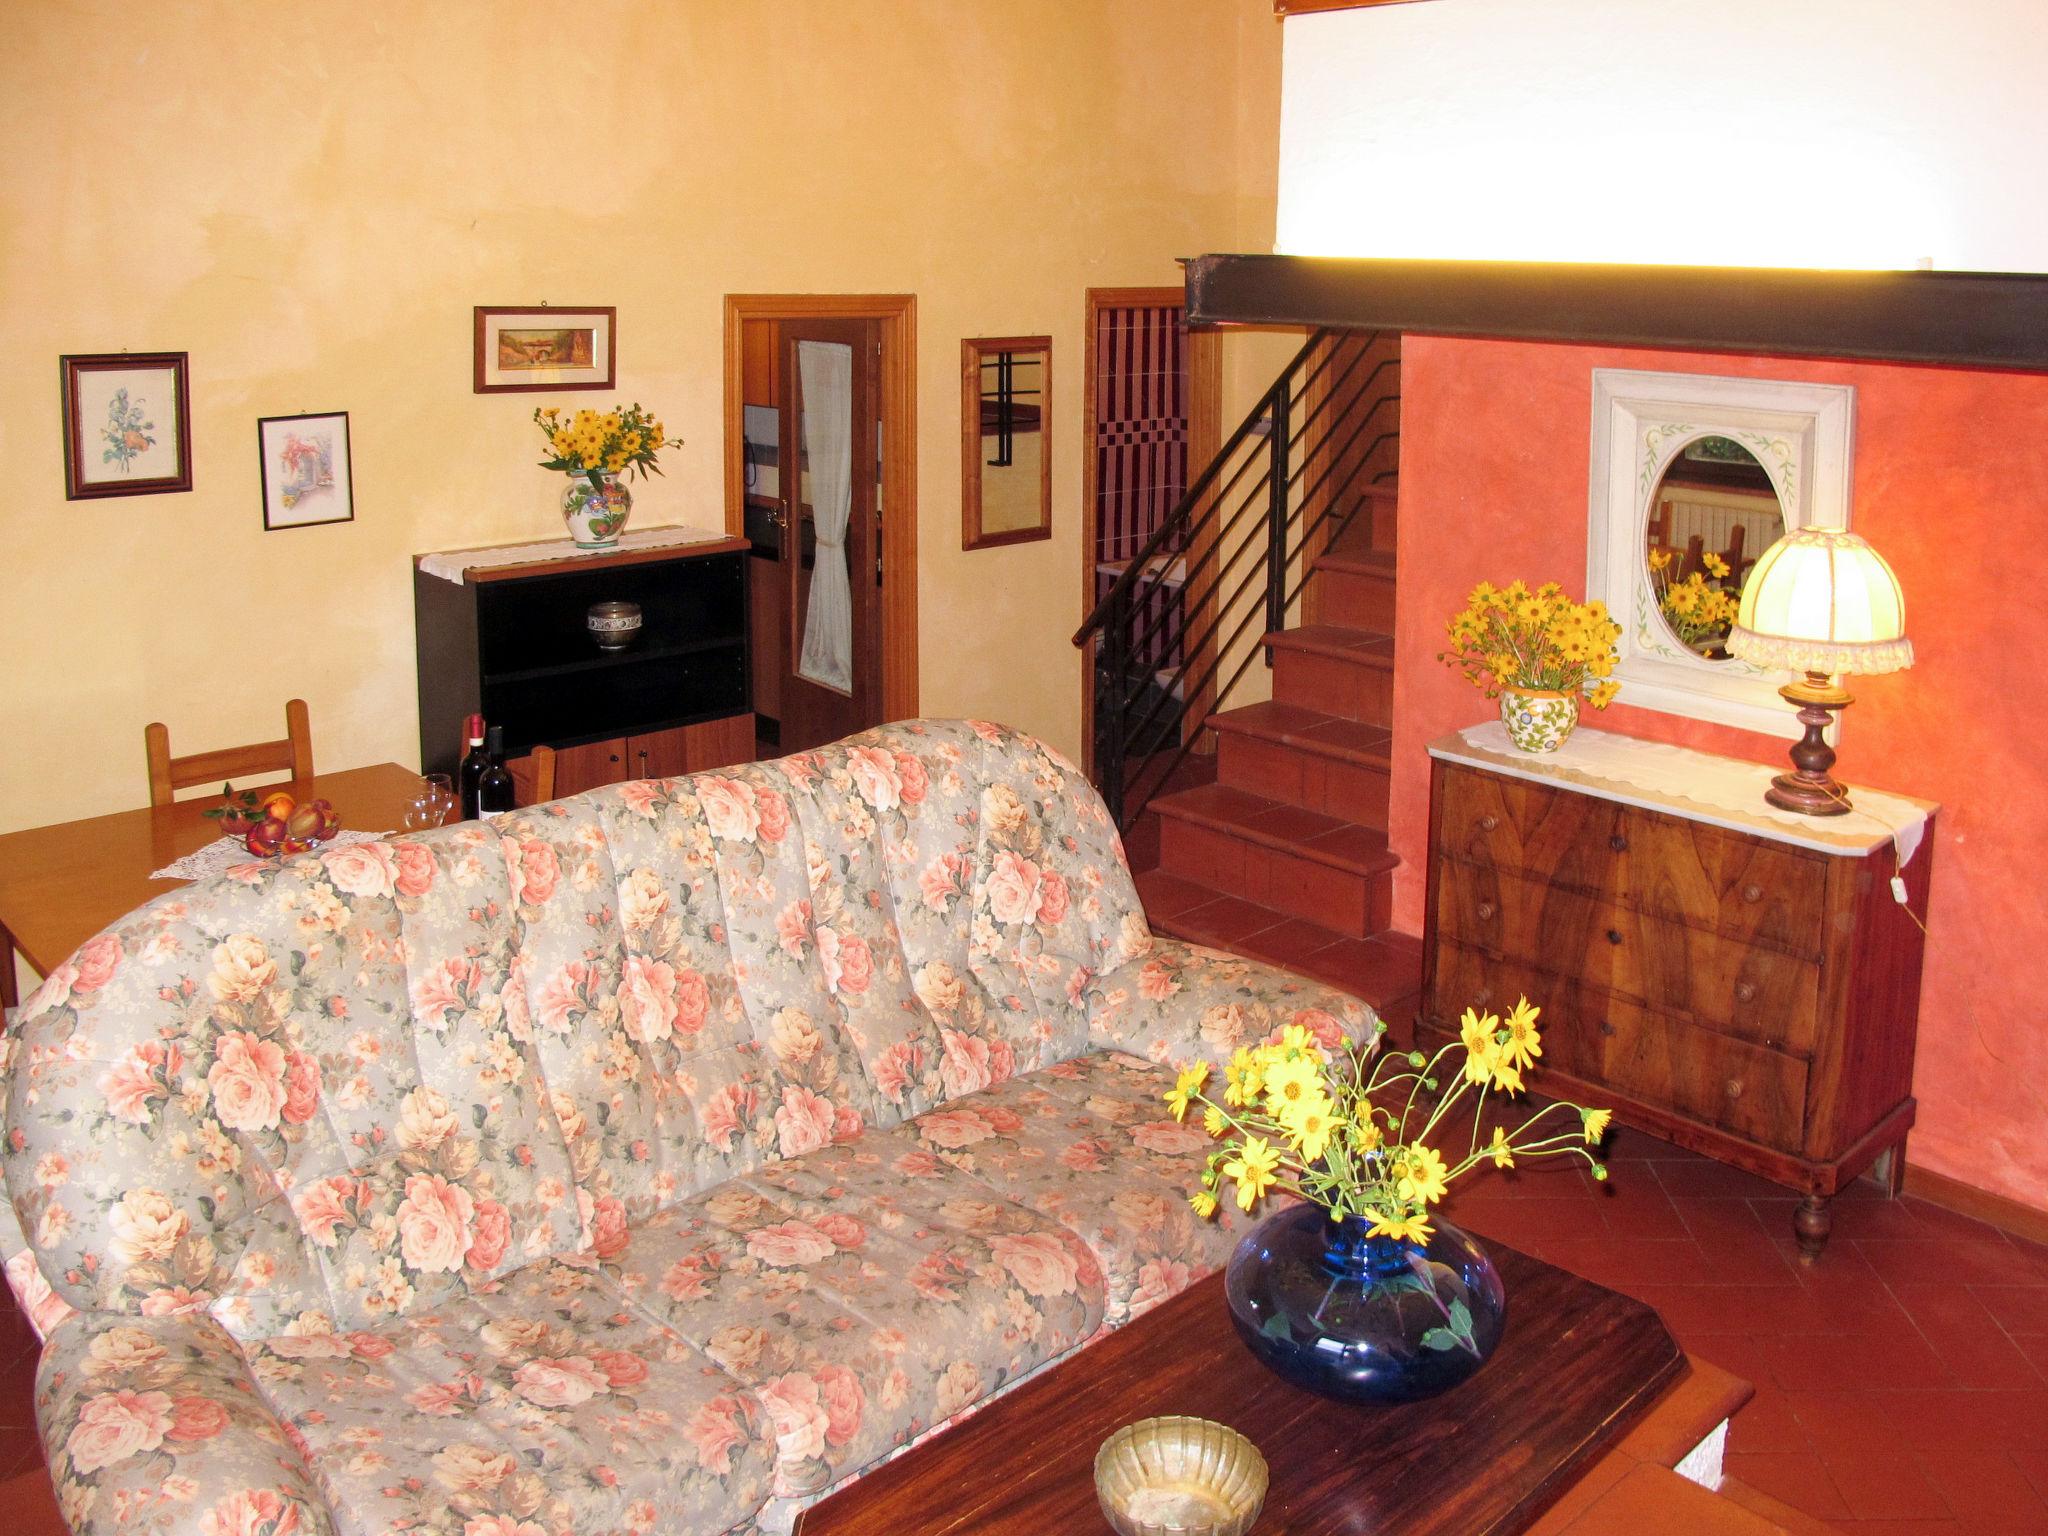 Foto 56 - Casa con 4 camere da letto a San Gimignano con piscina e giardino